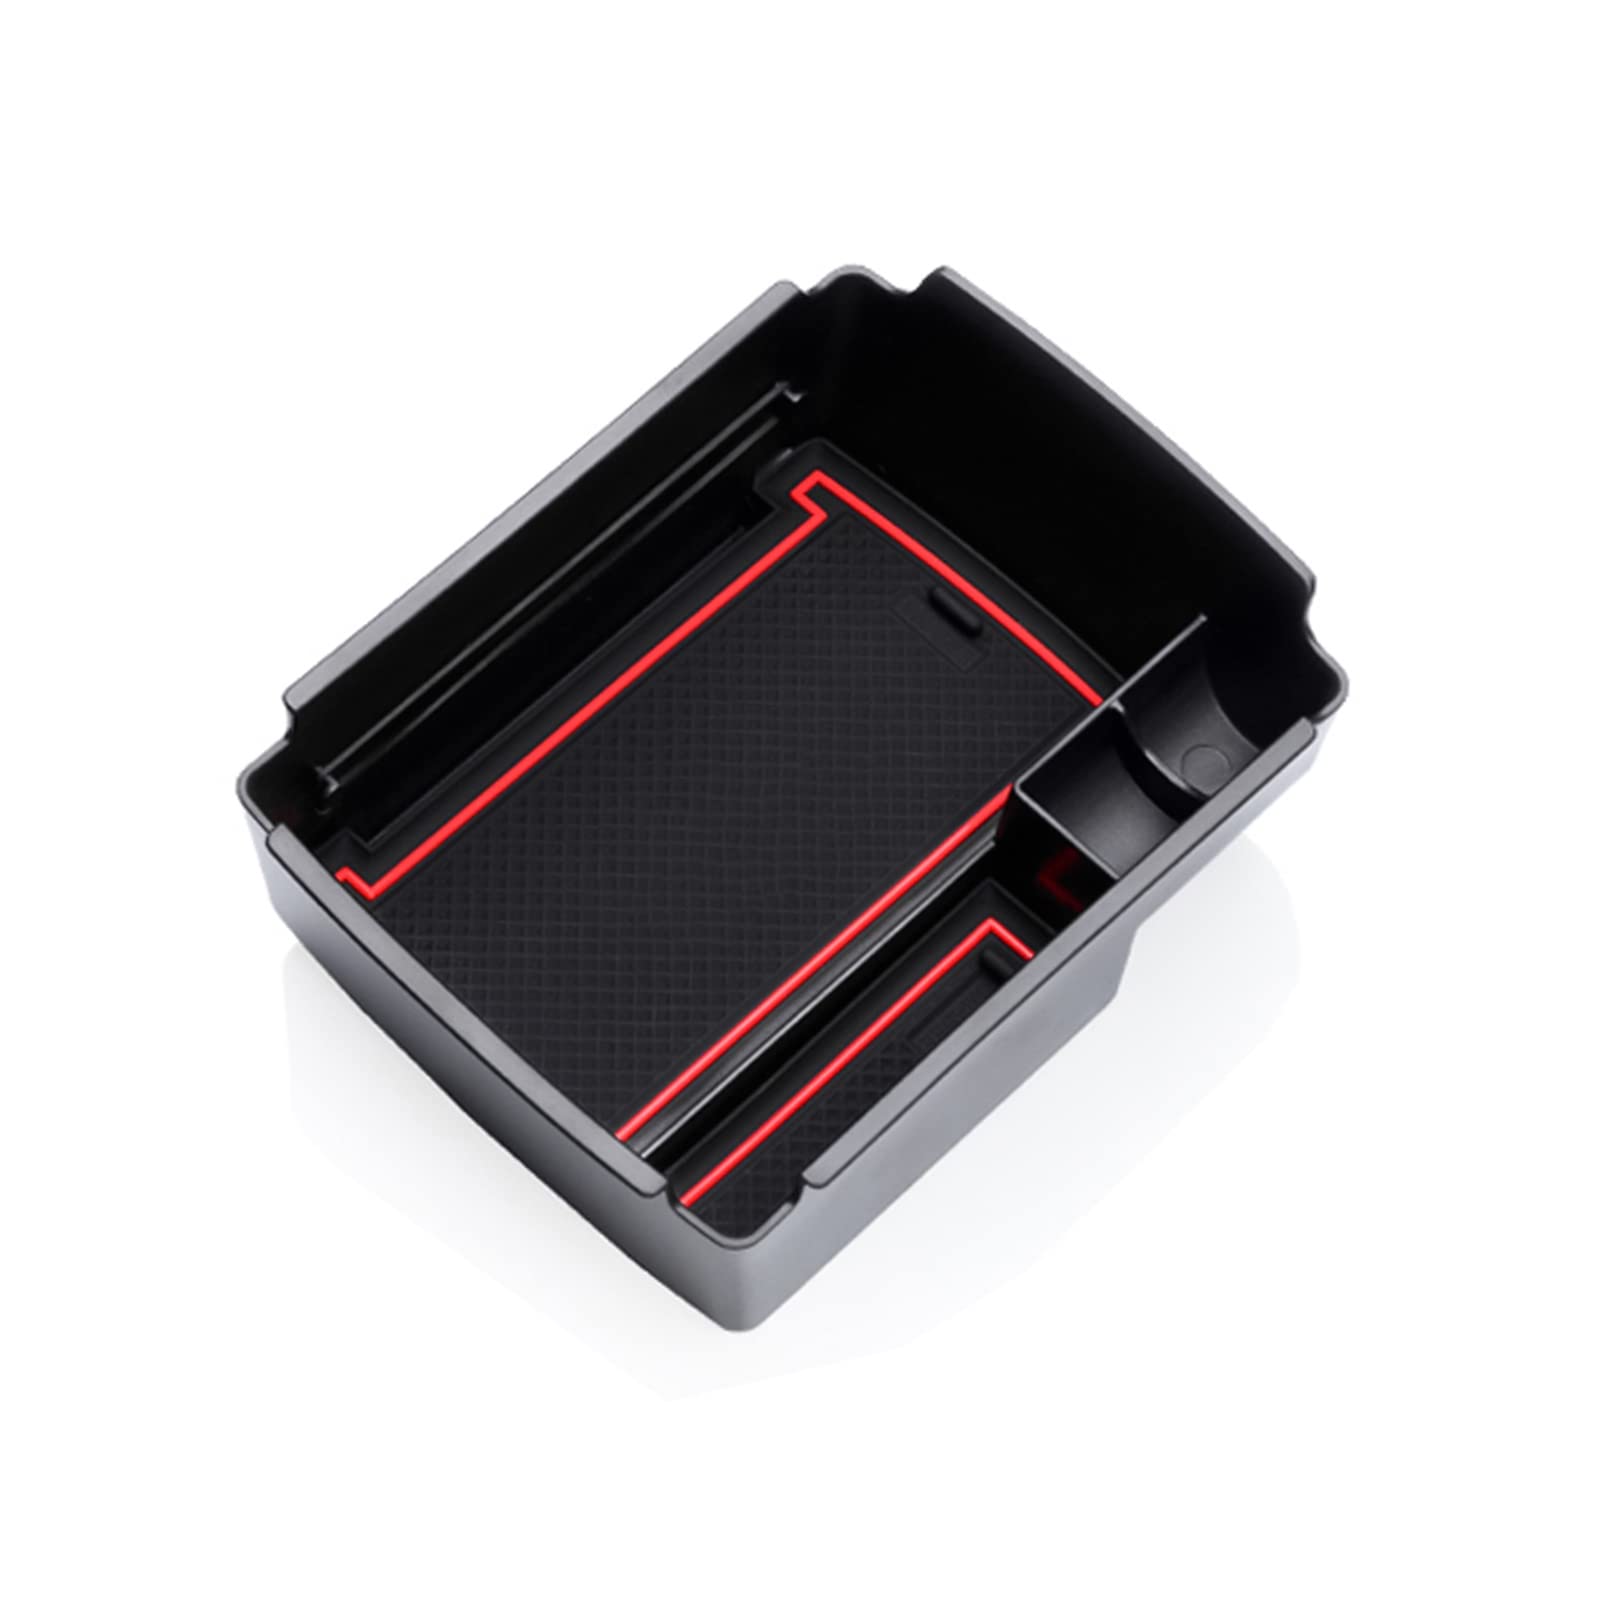 VW Golf 7 7.5 Center Armrest Storage Tray 2013-2019 - LFOTPP Car Accessories